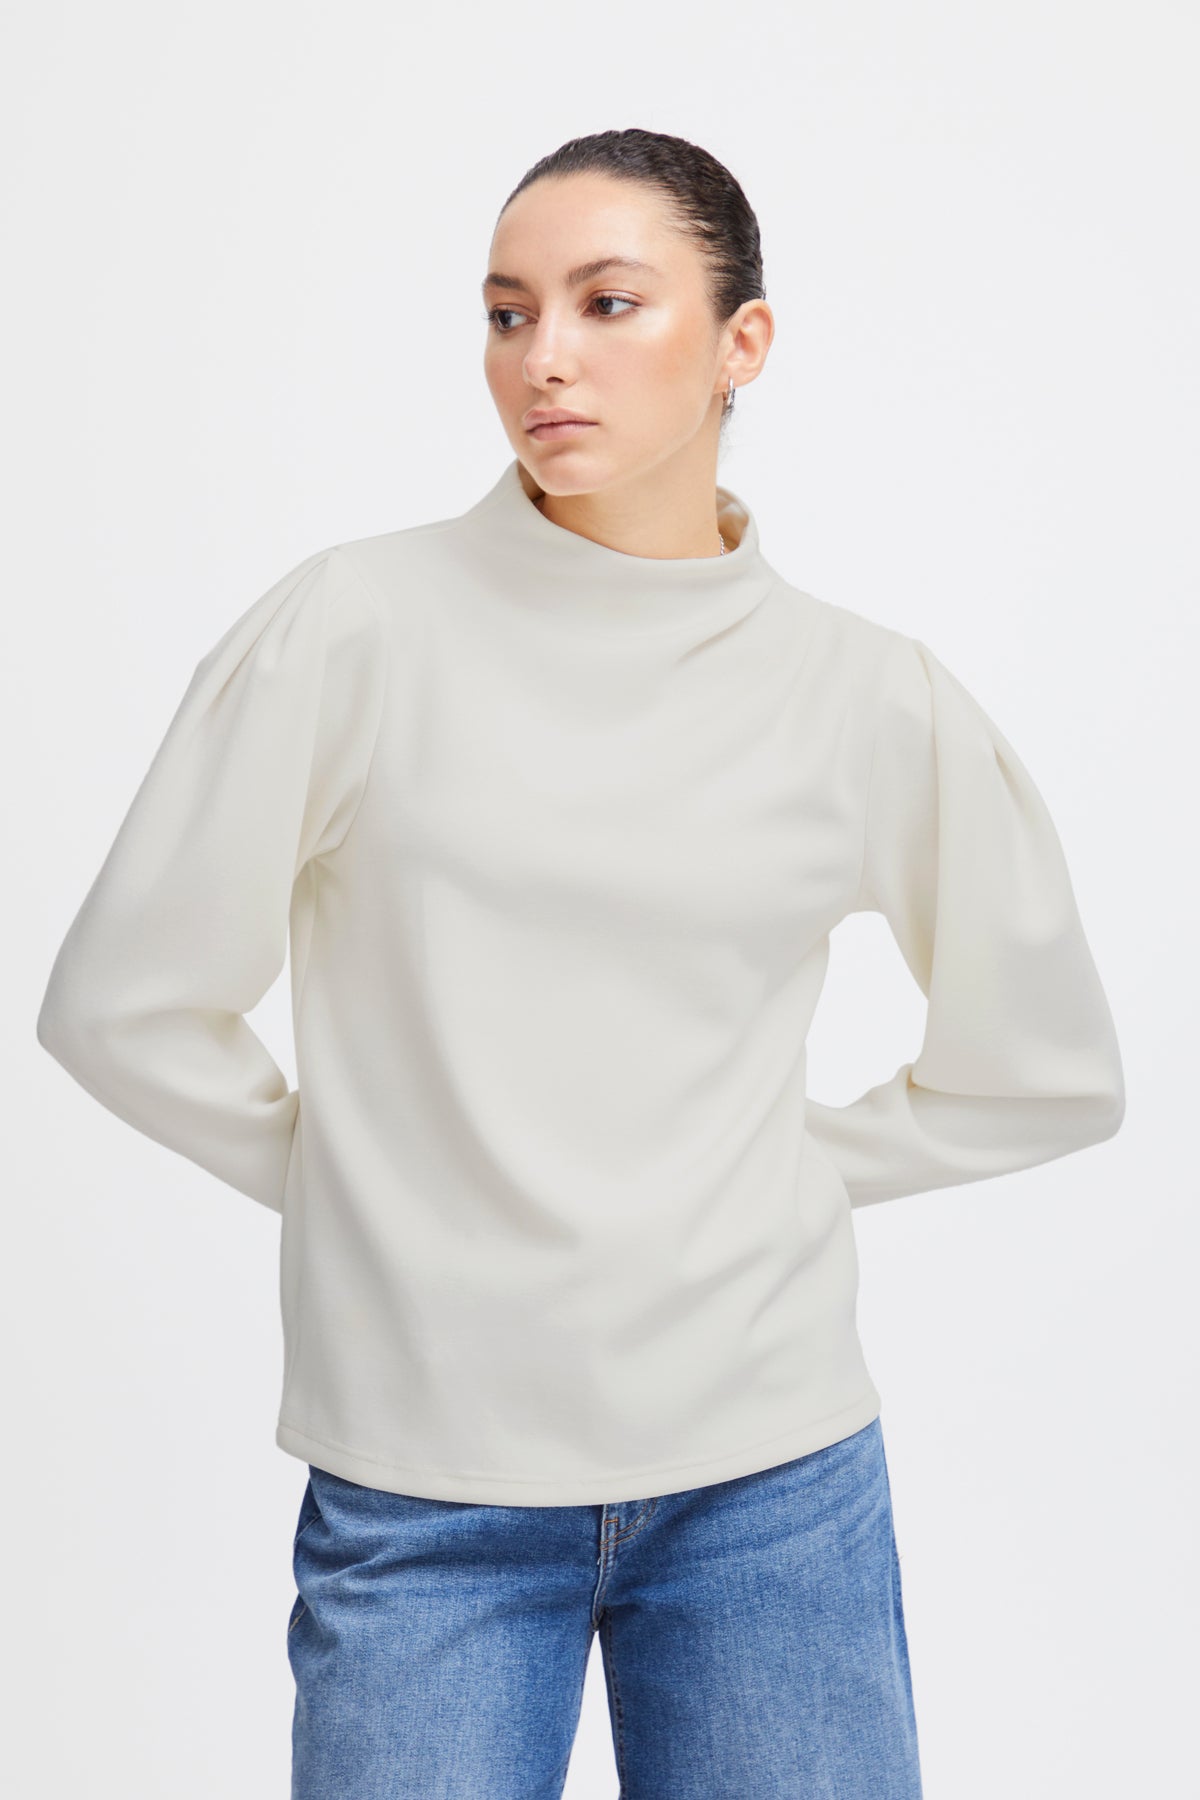 Naida Long Sleeve T-Shirt in Star White